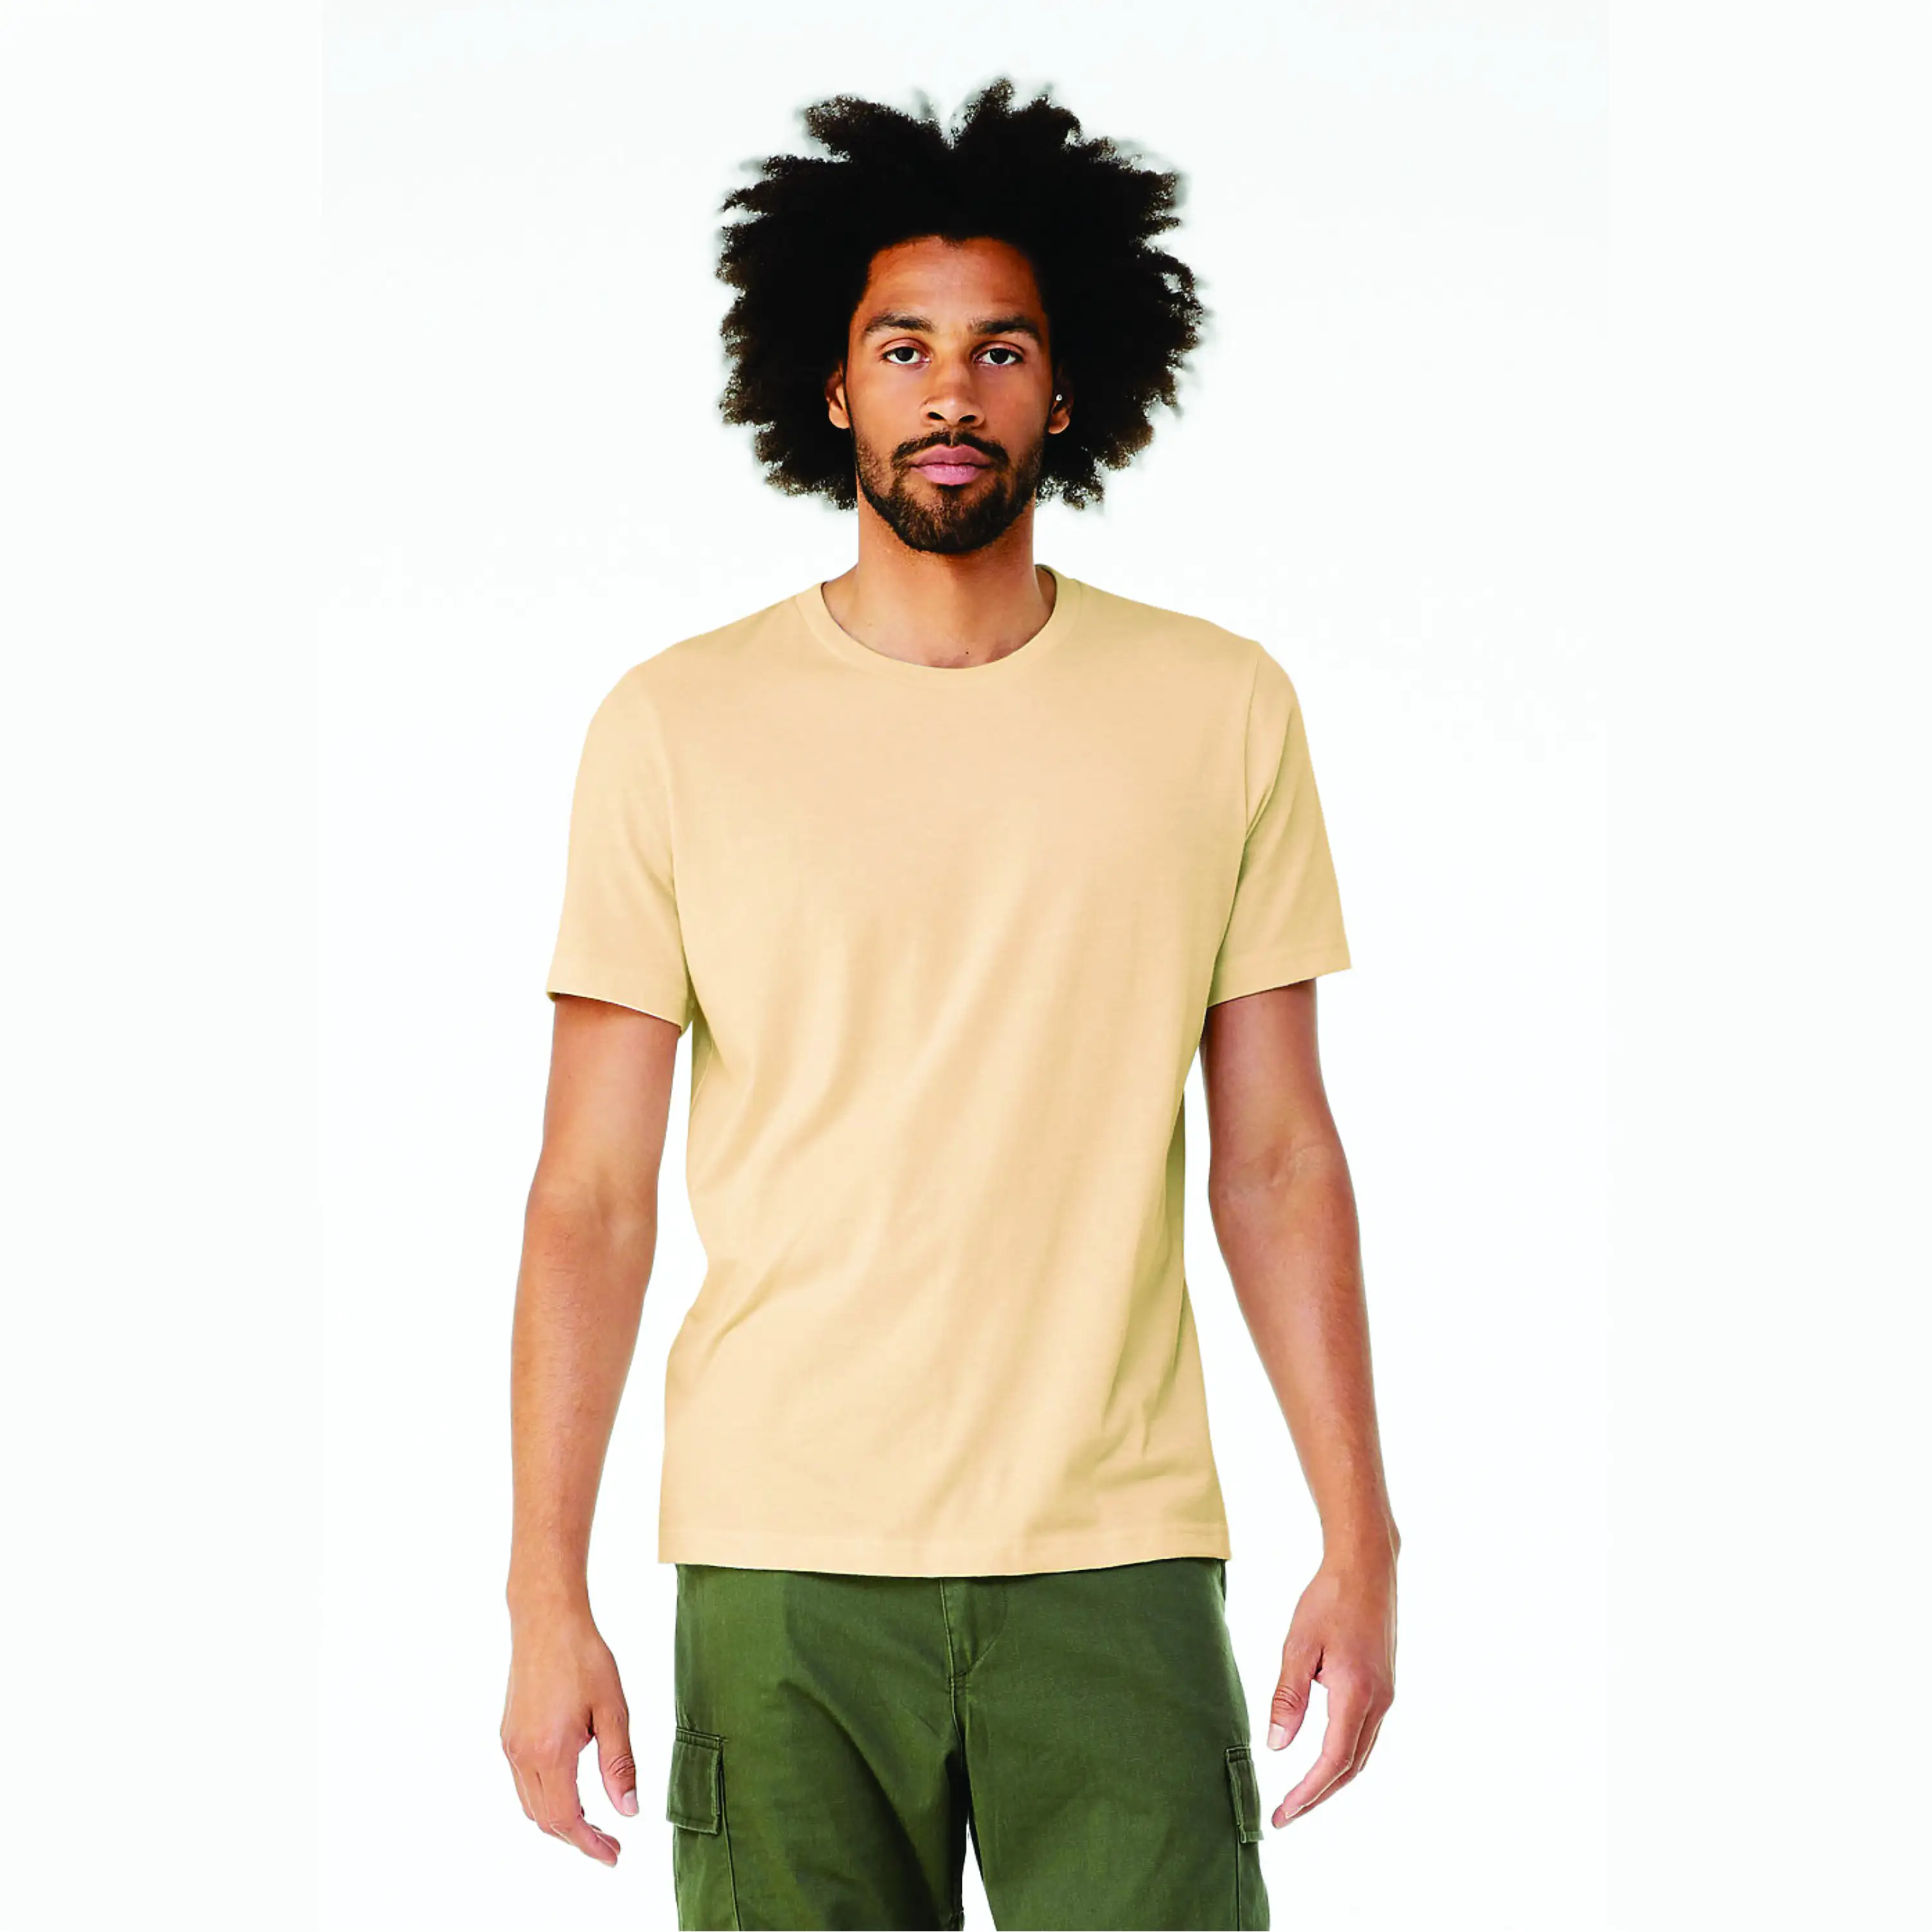 Soft Cream Heather Unisex T-Shirt - 52% Cotton, 48% Poly, 4.2 oz, Short Sleeve